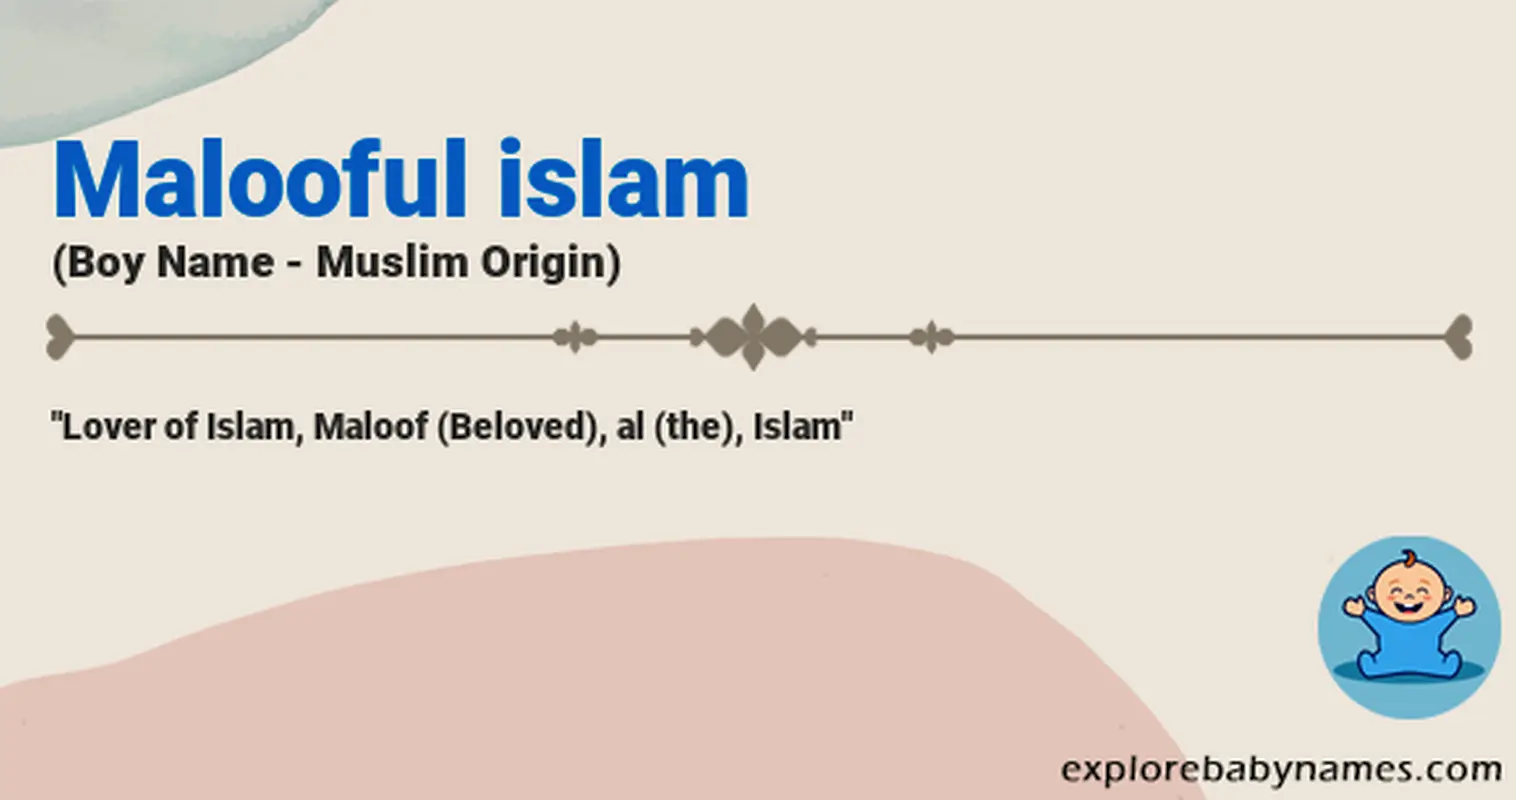 Meaning of Malooful islam